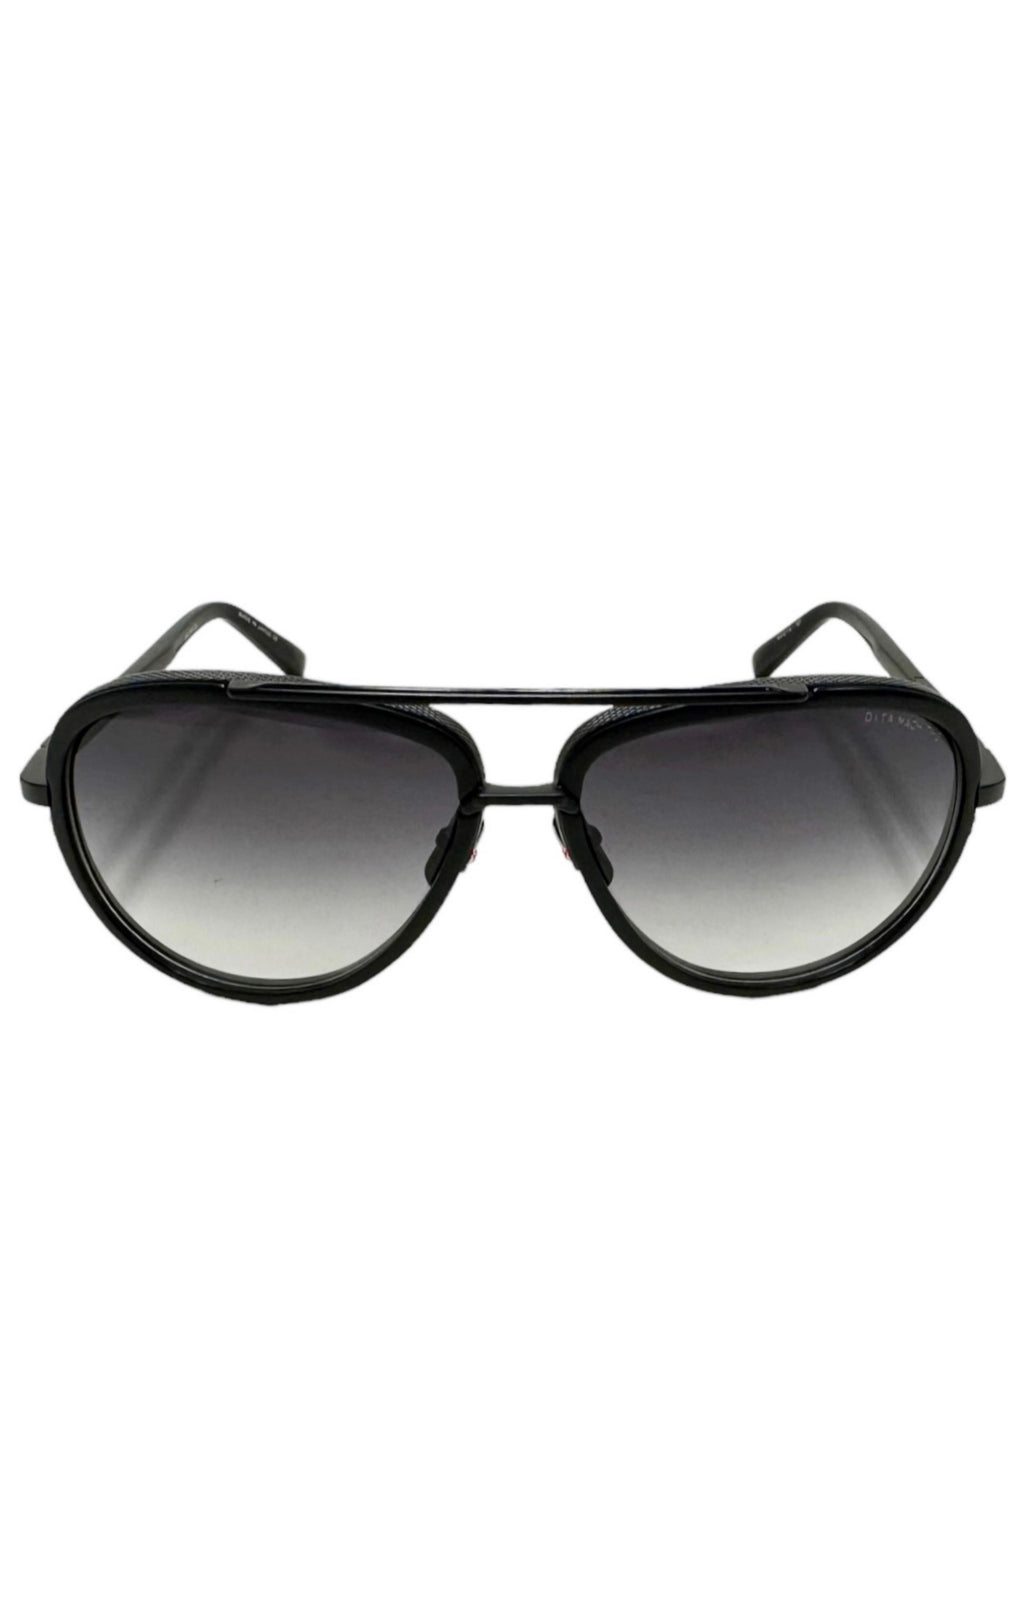 DITA (RARE) Sunglasses Size: 6" x 2.125"